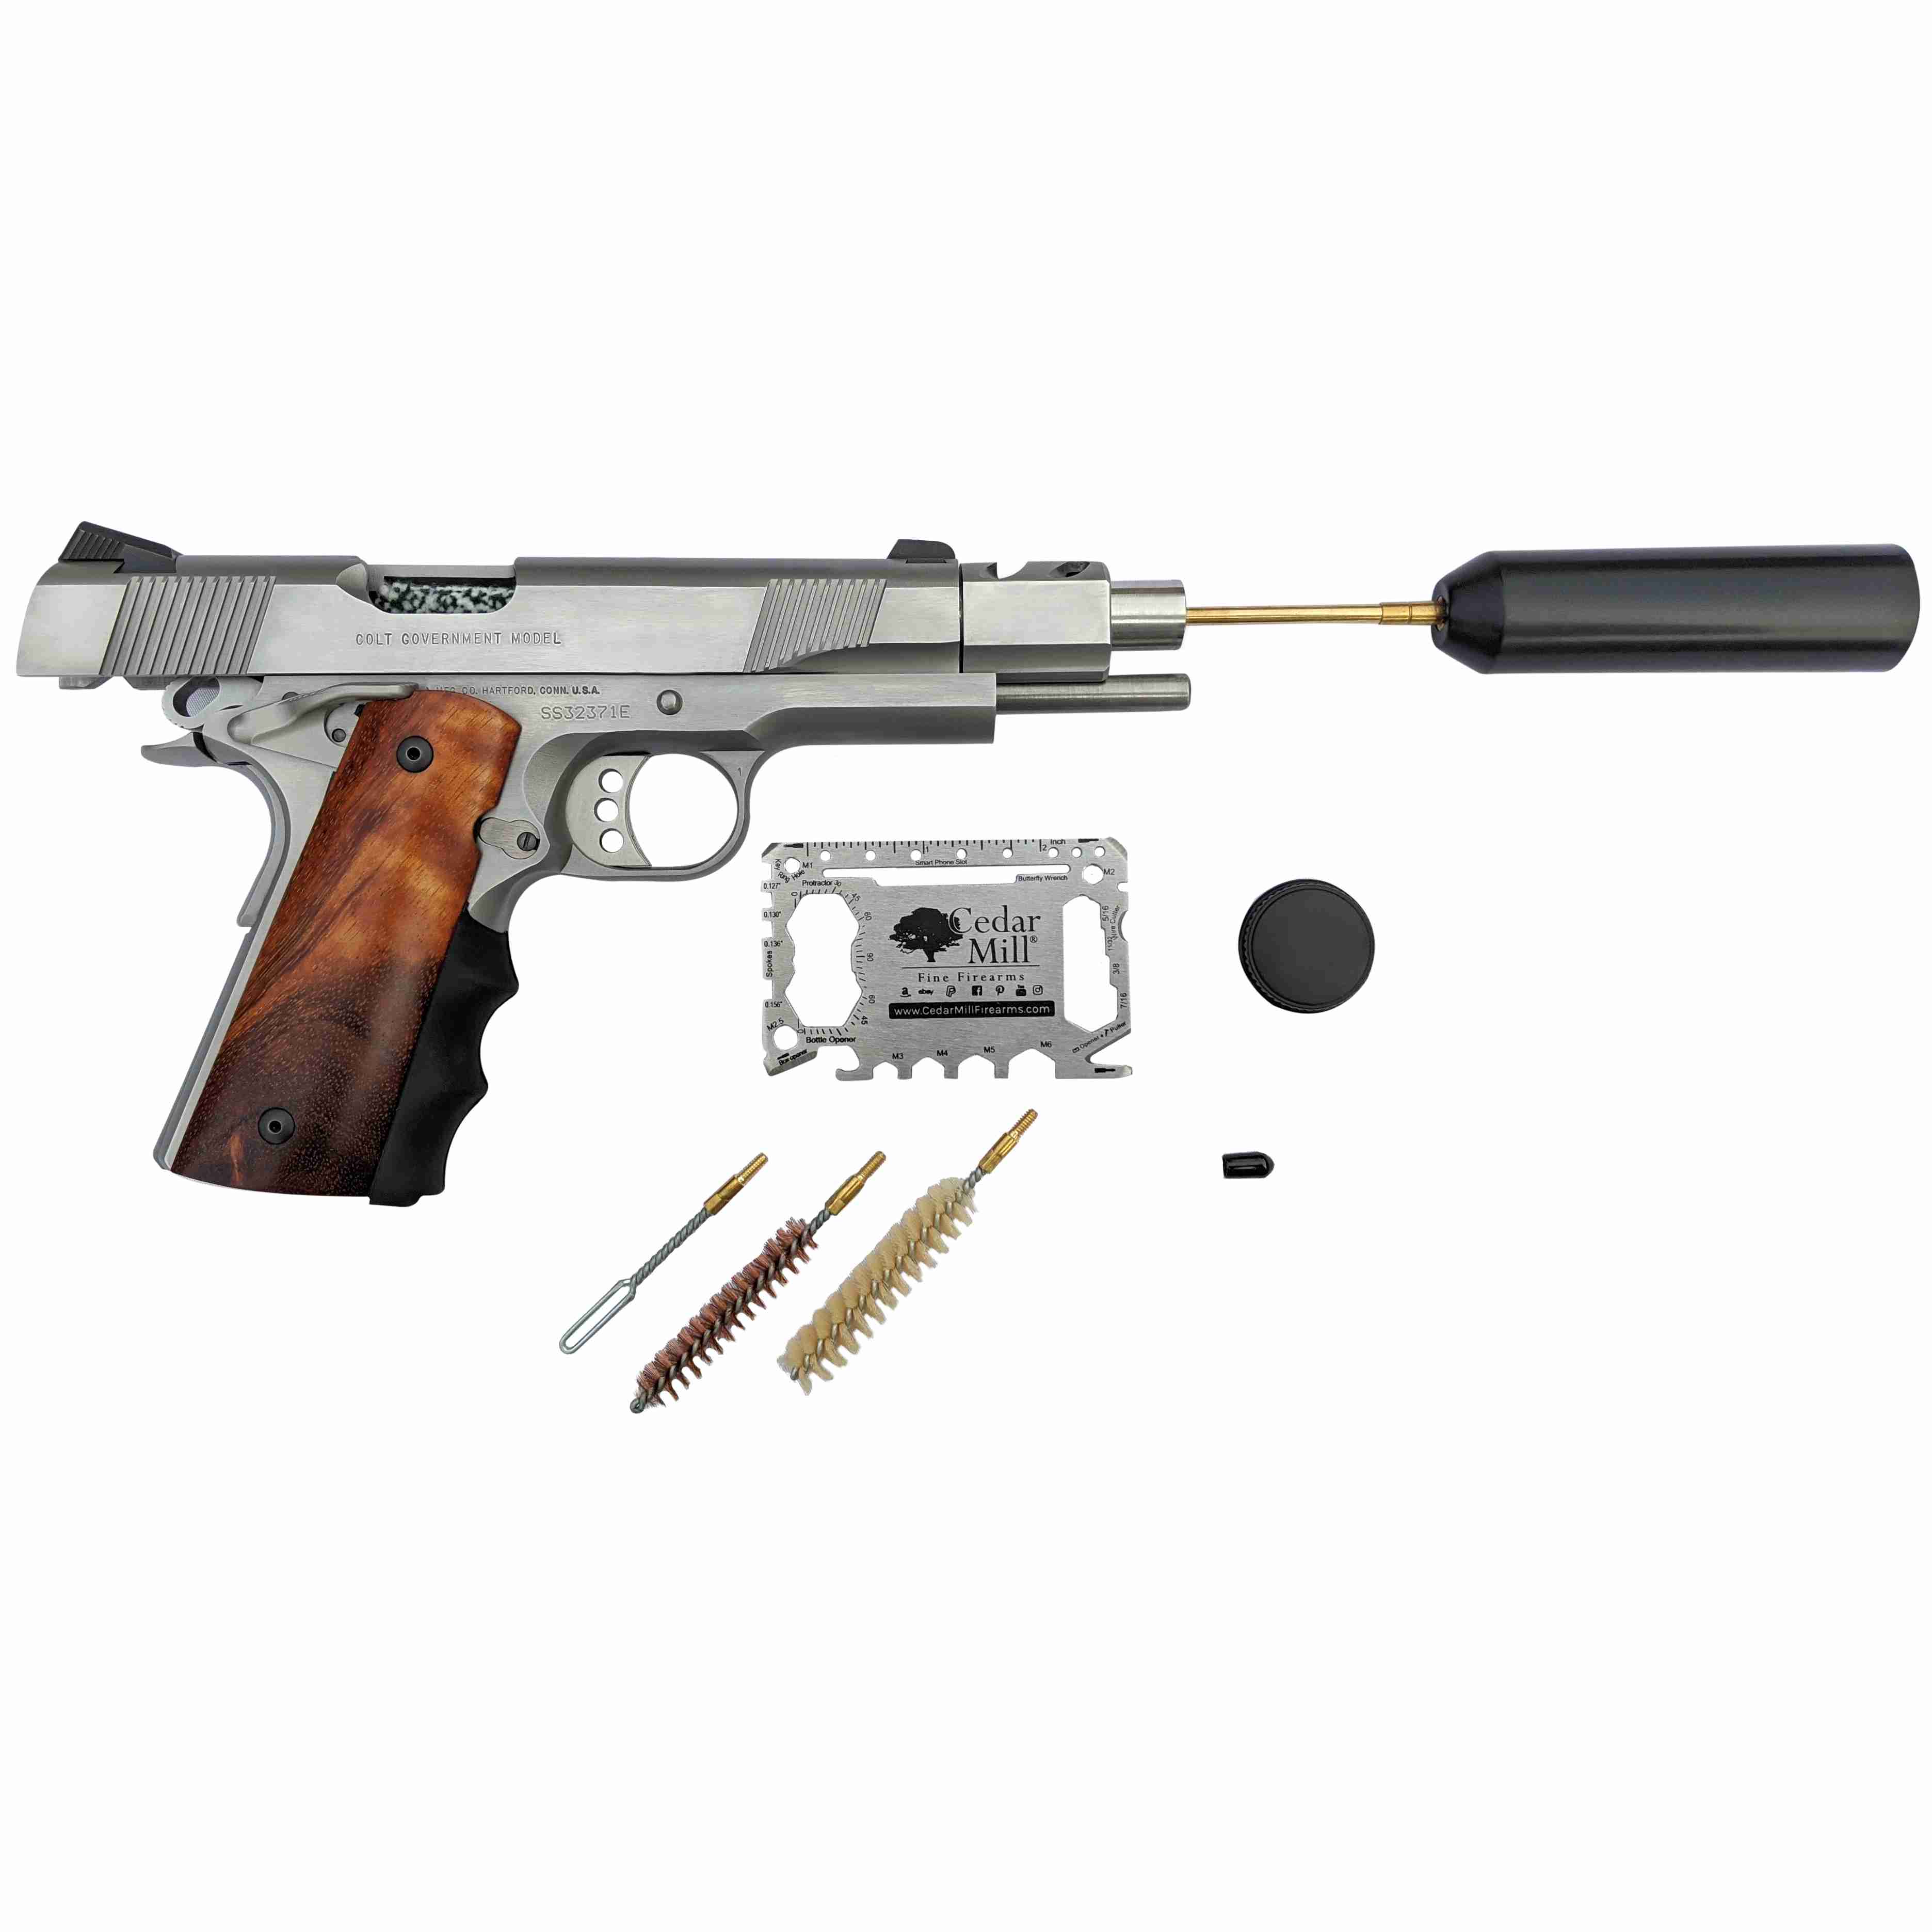 gun-cleaning-kit-9mm-glock-pistol-shotgun-rifle-handgun with discount code